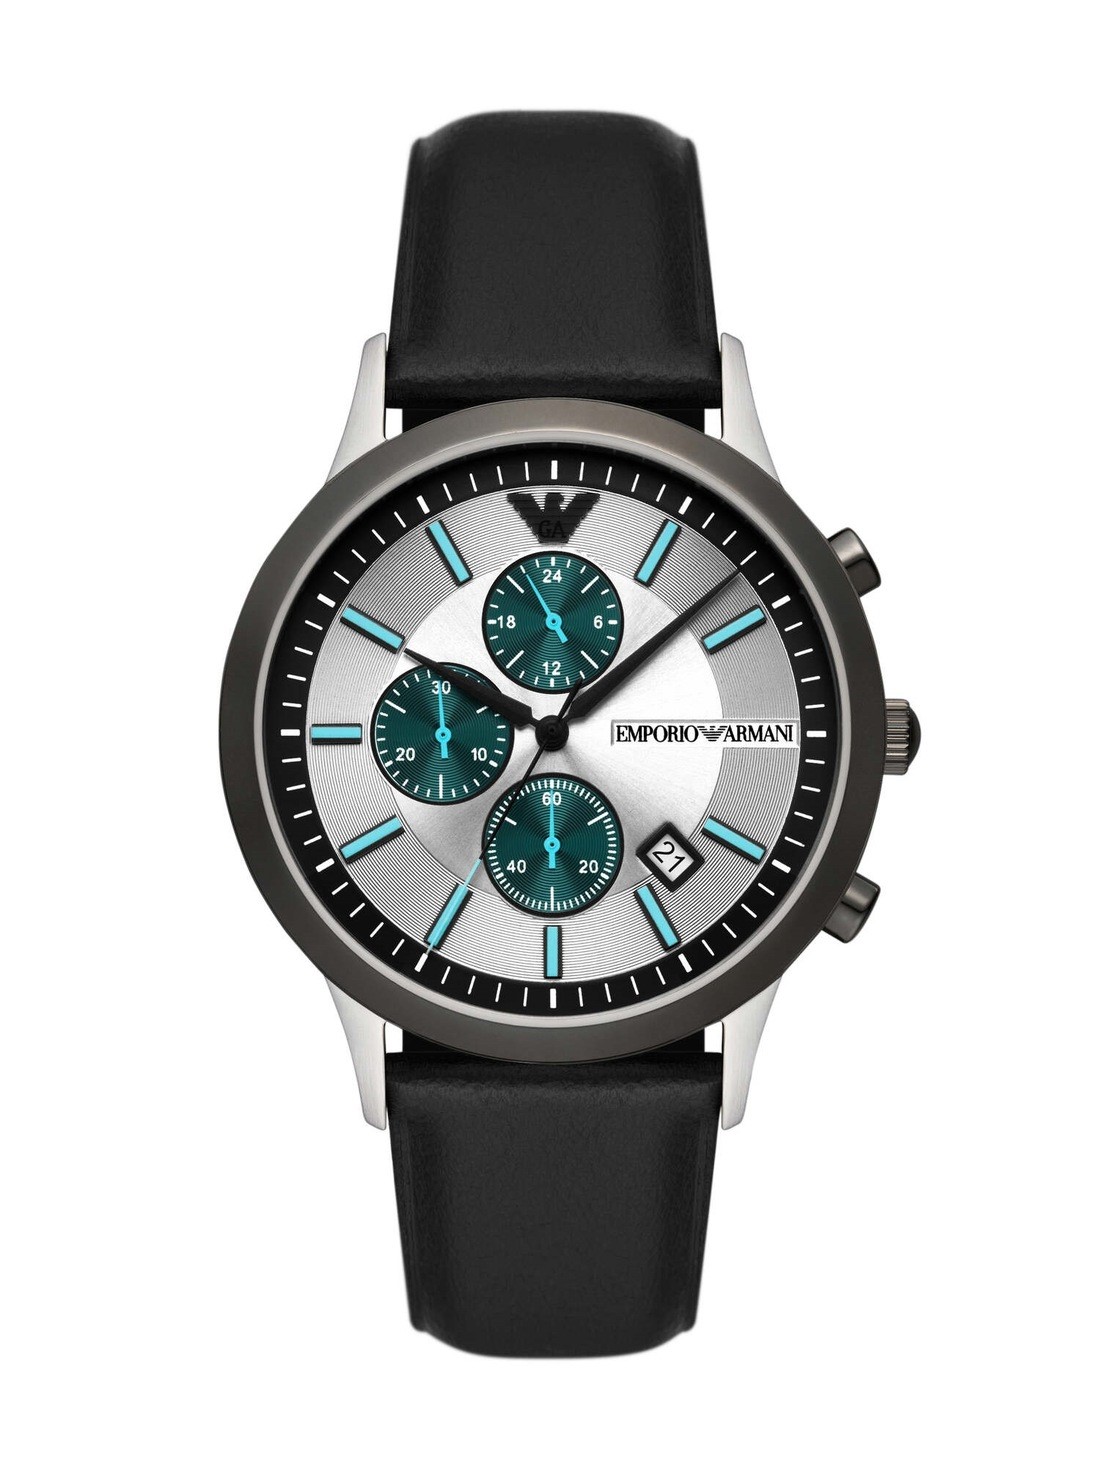 Emporio Armani Black Watch AR11473 - Watch Station India